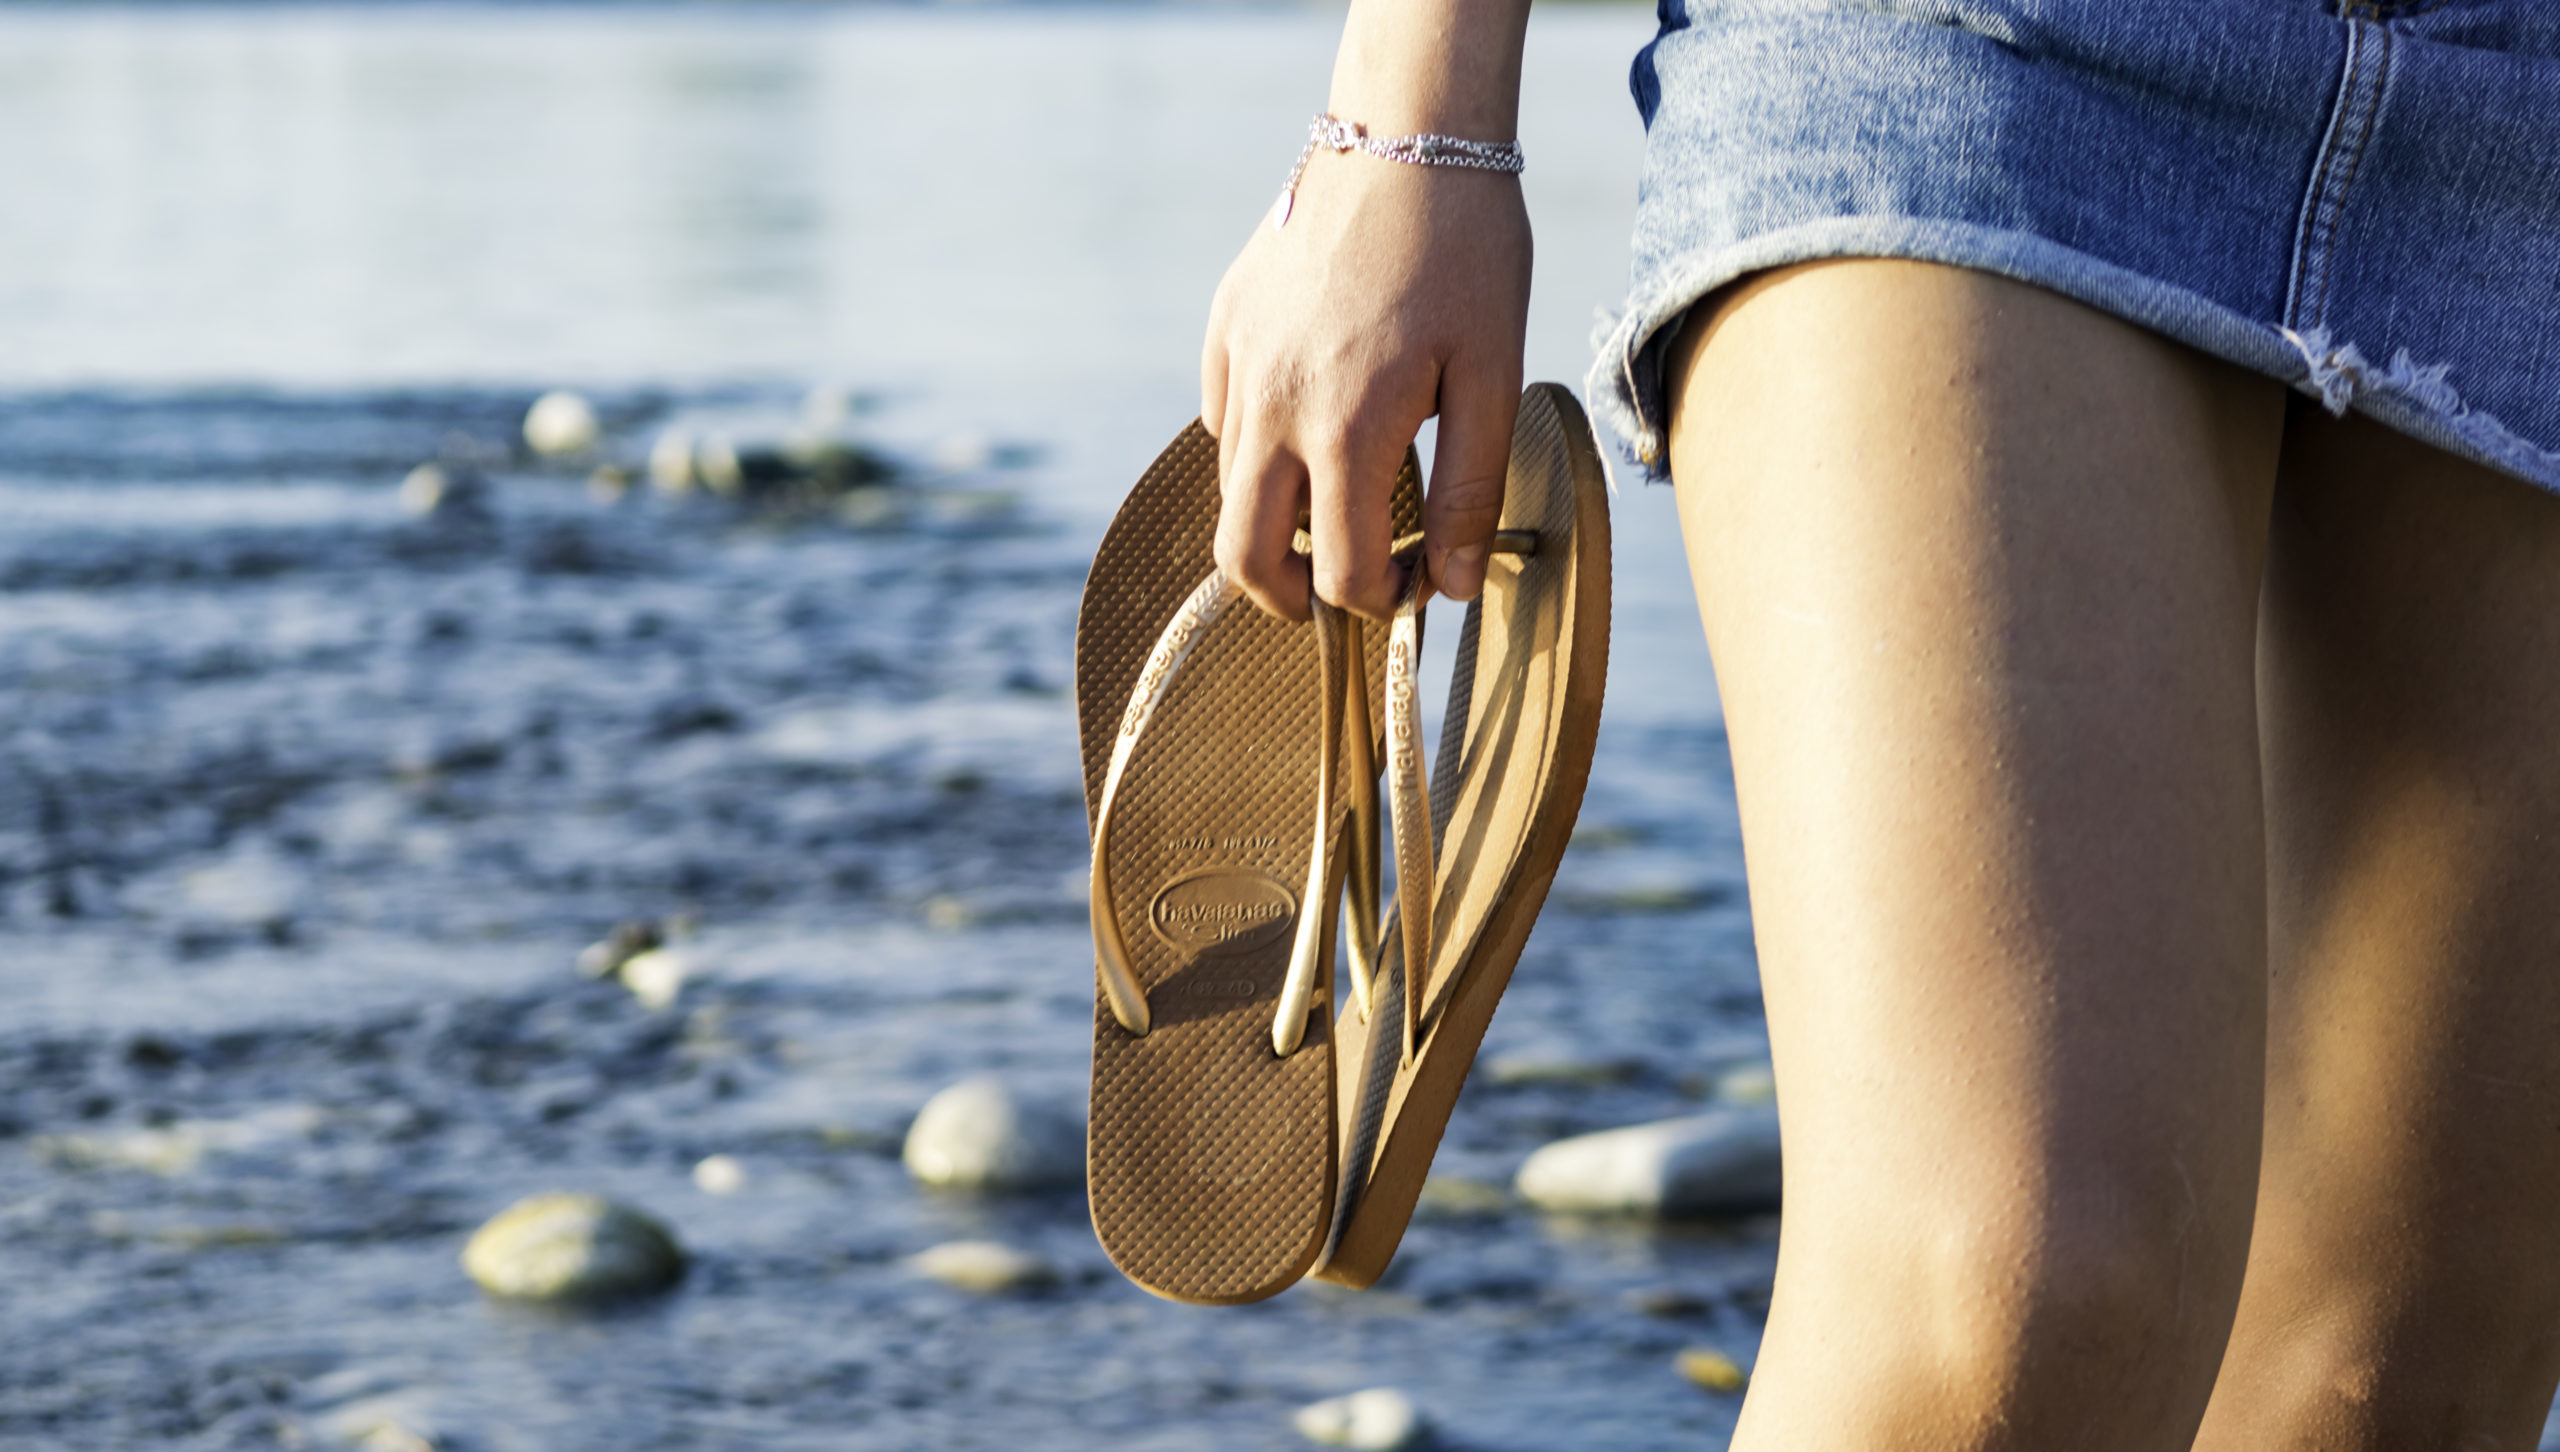 Woman holding flip flops on beach